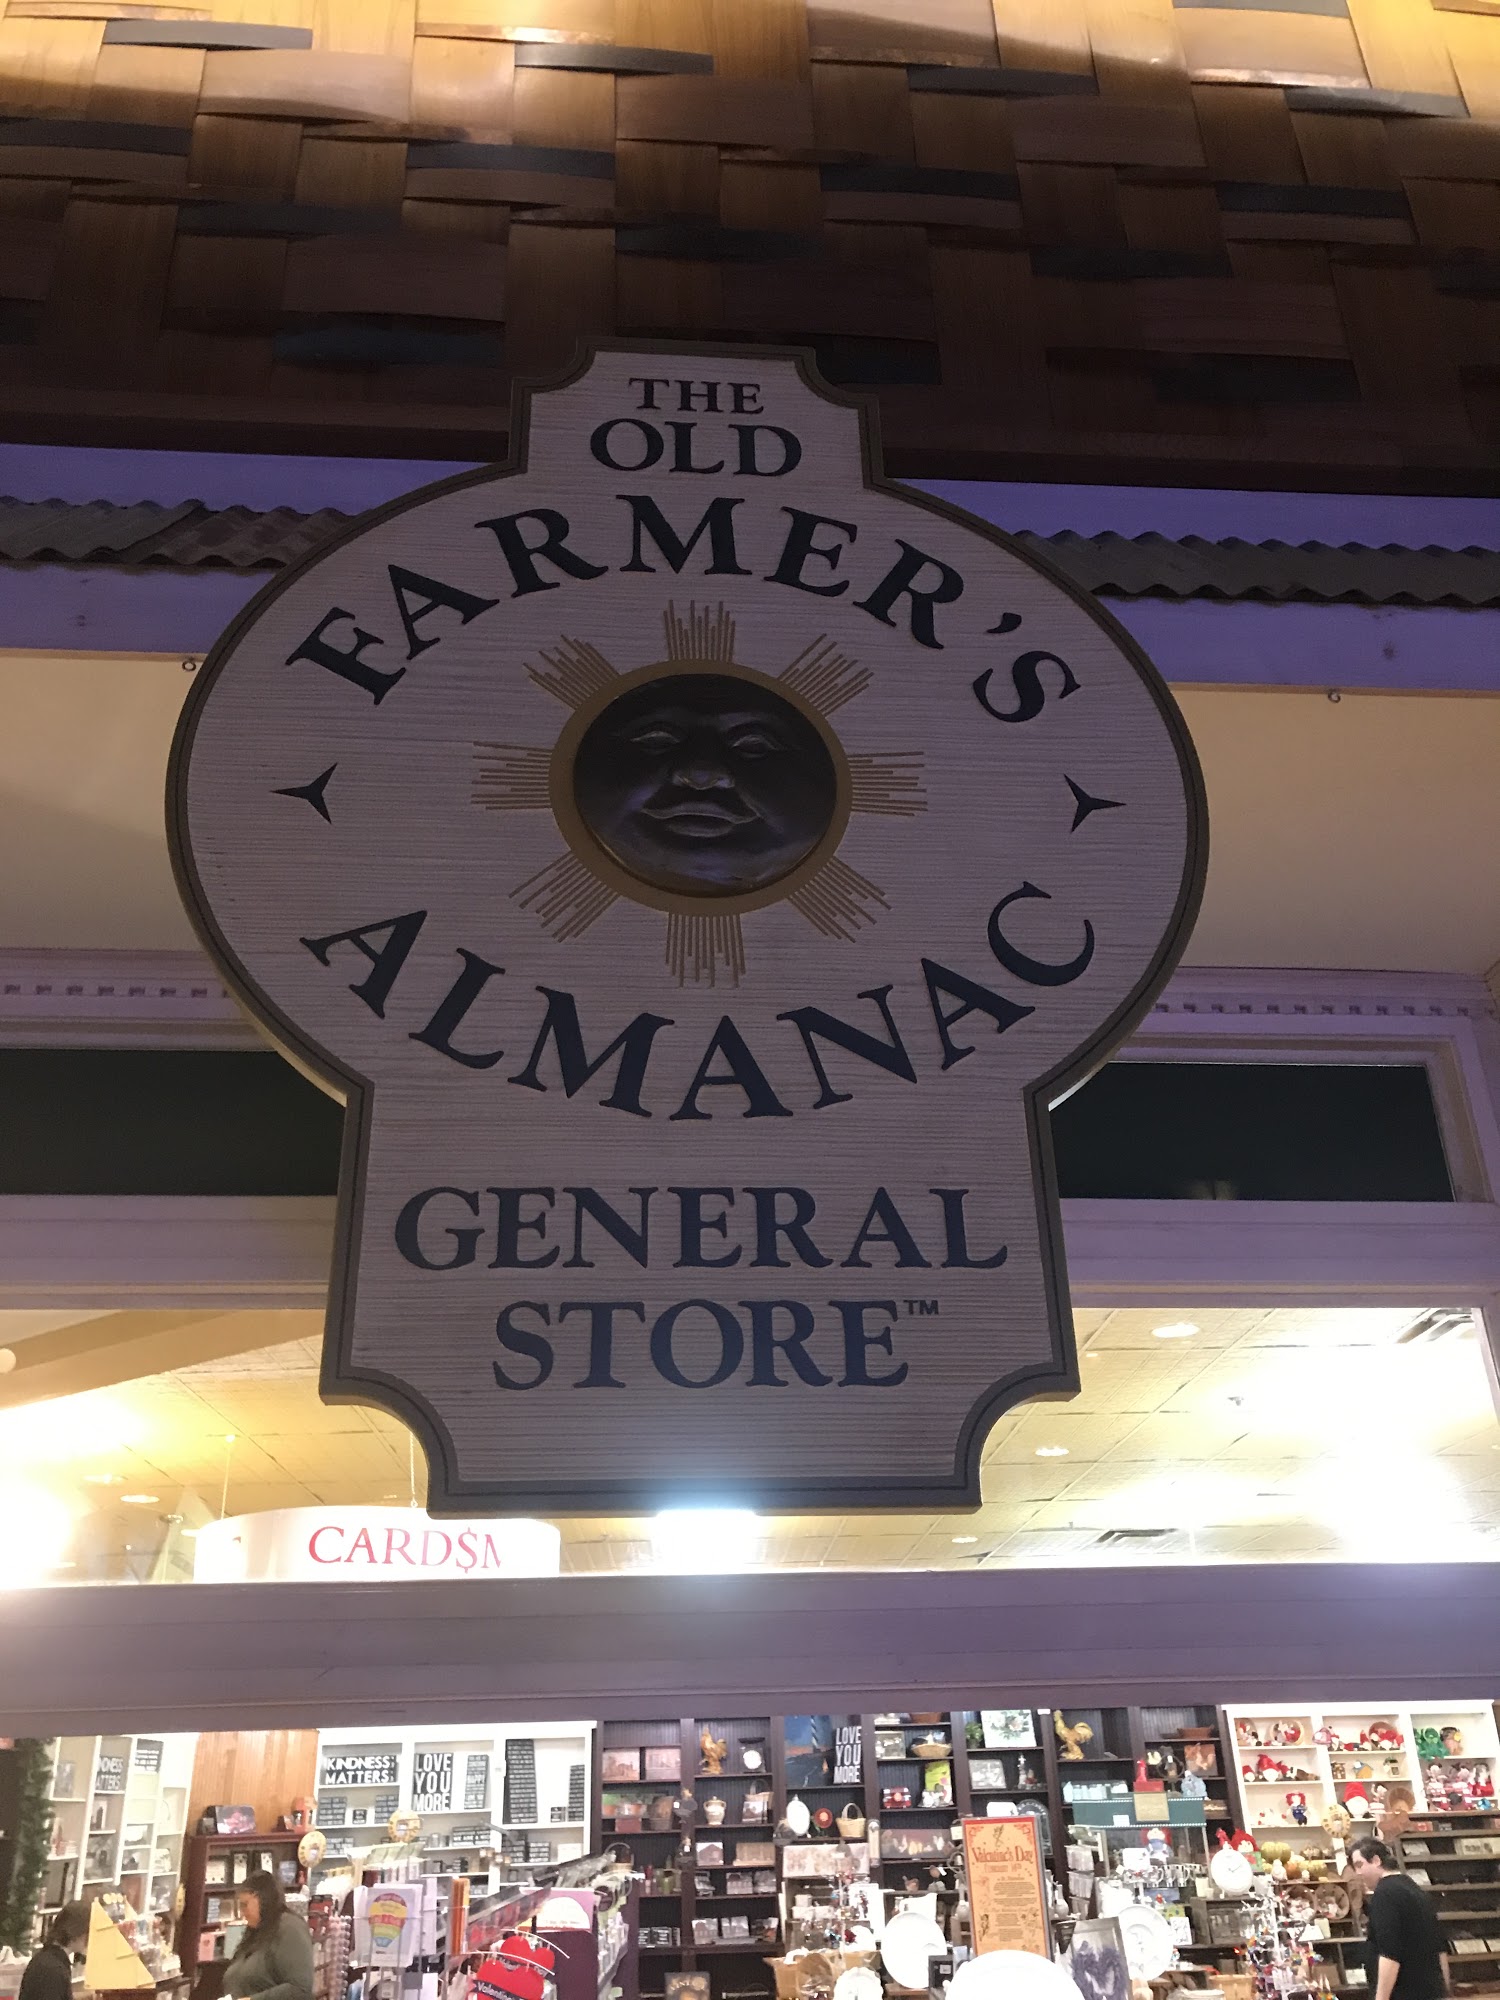 The Old Farmer's Almanac General Store